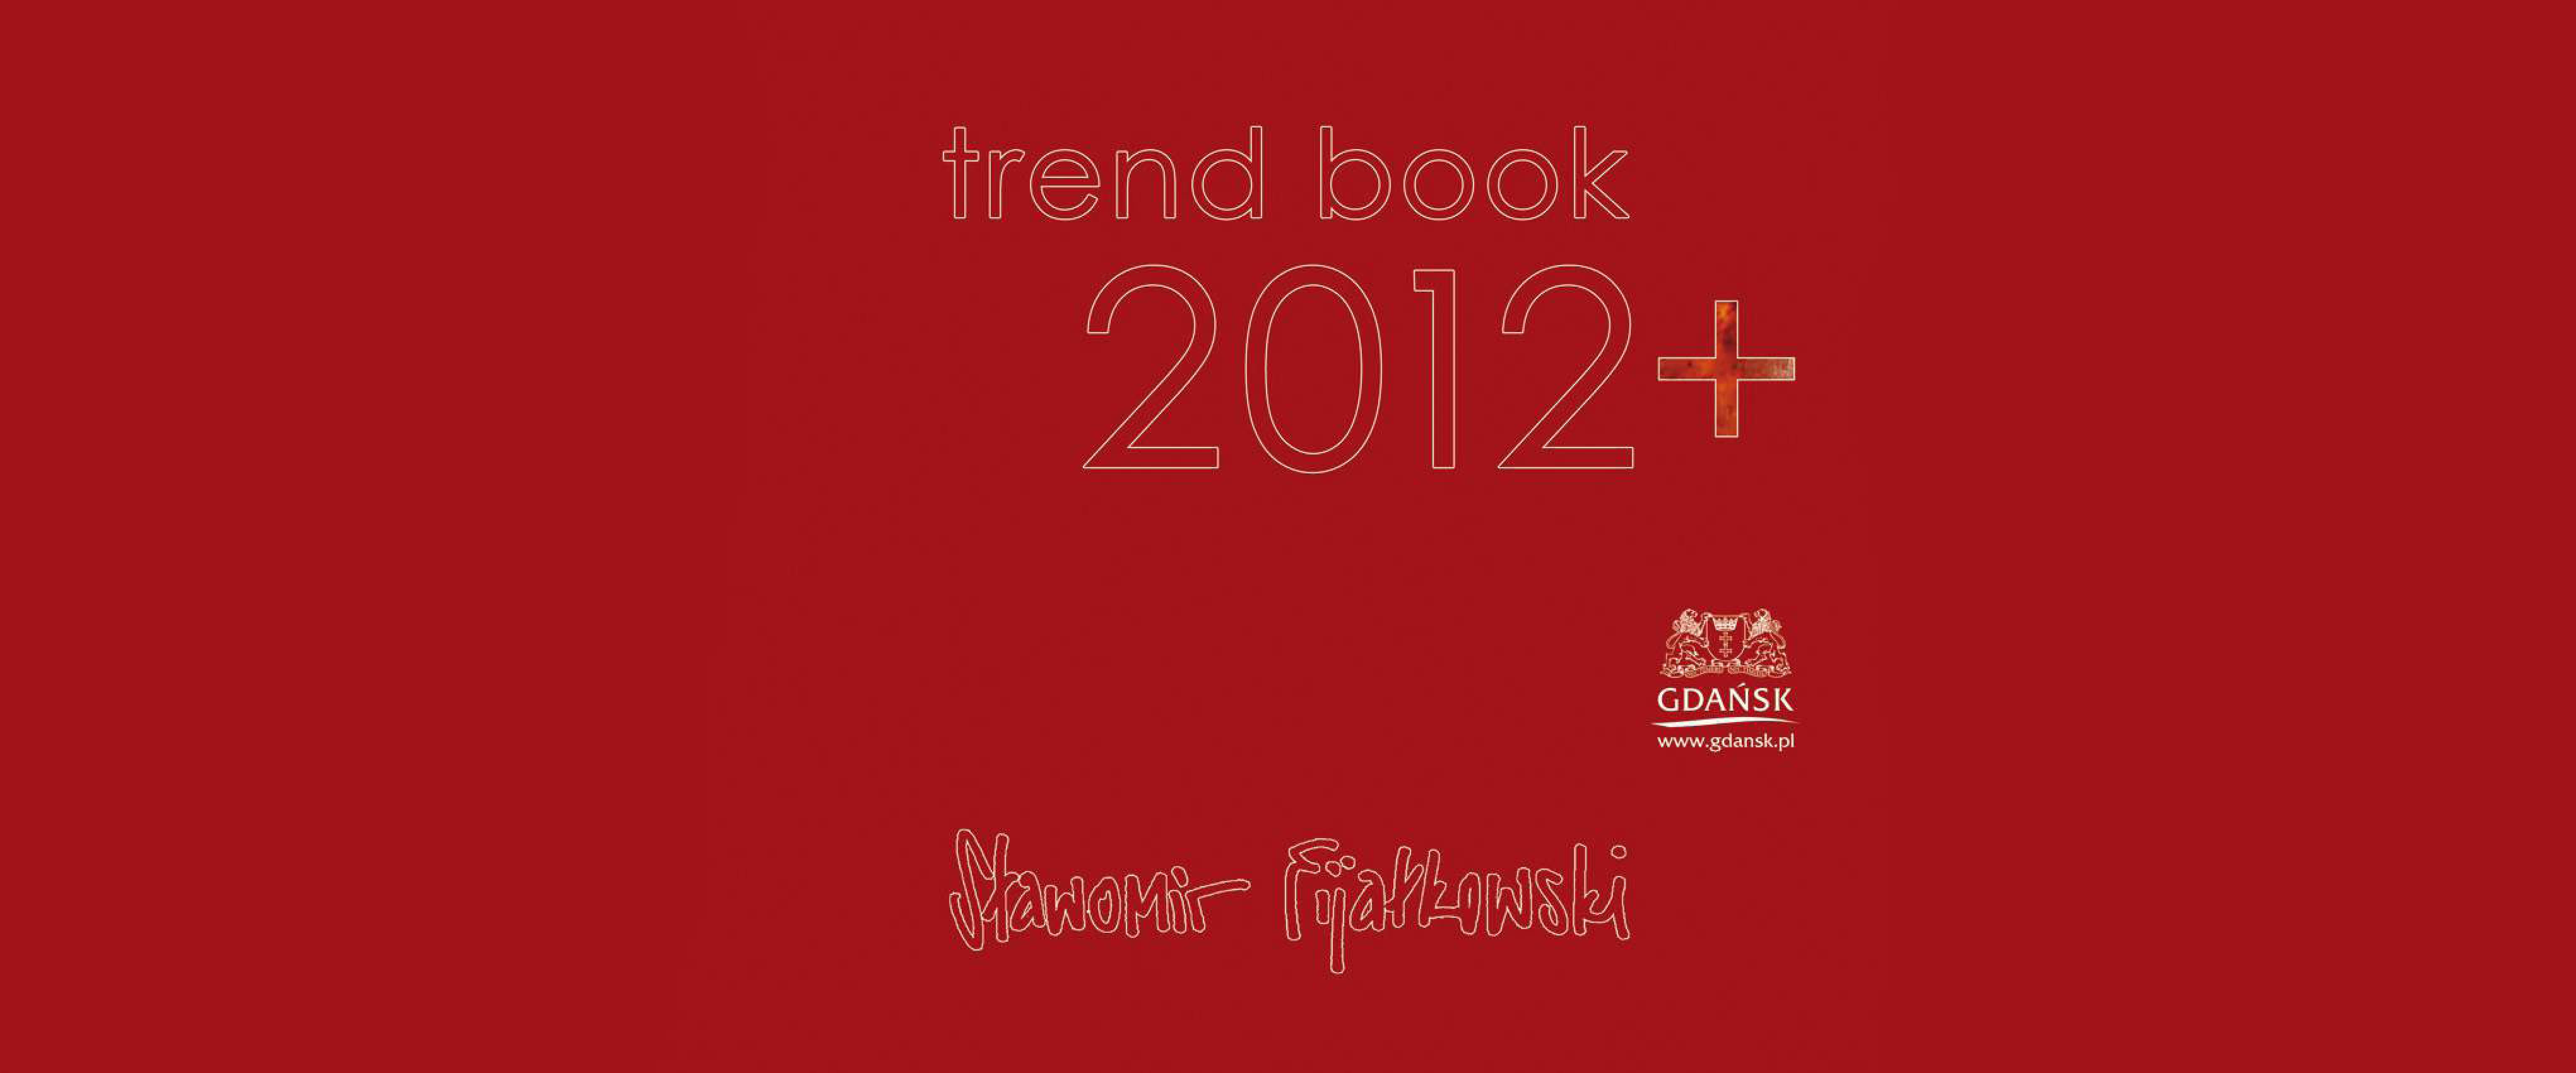 trend book 2012